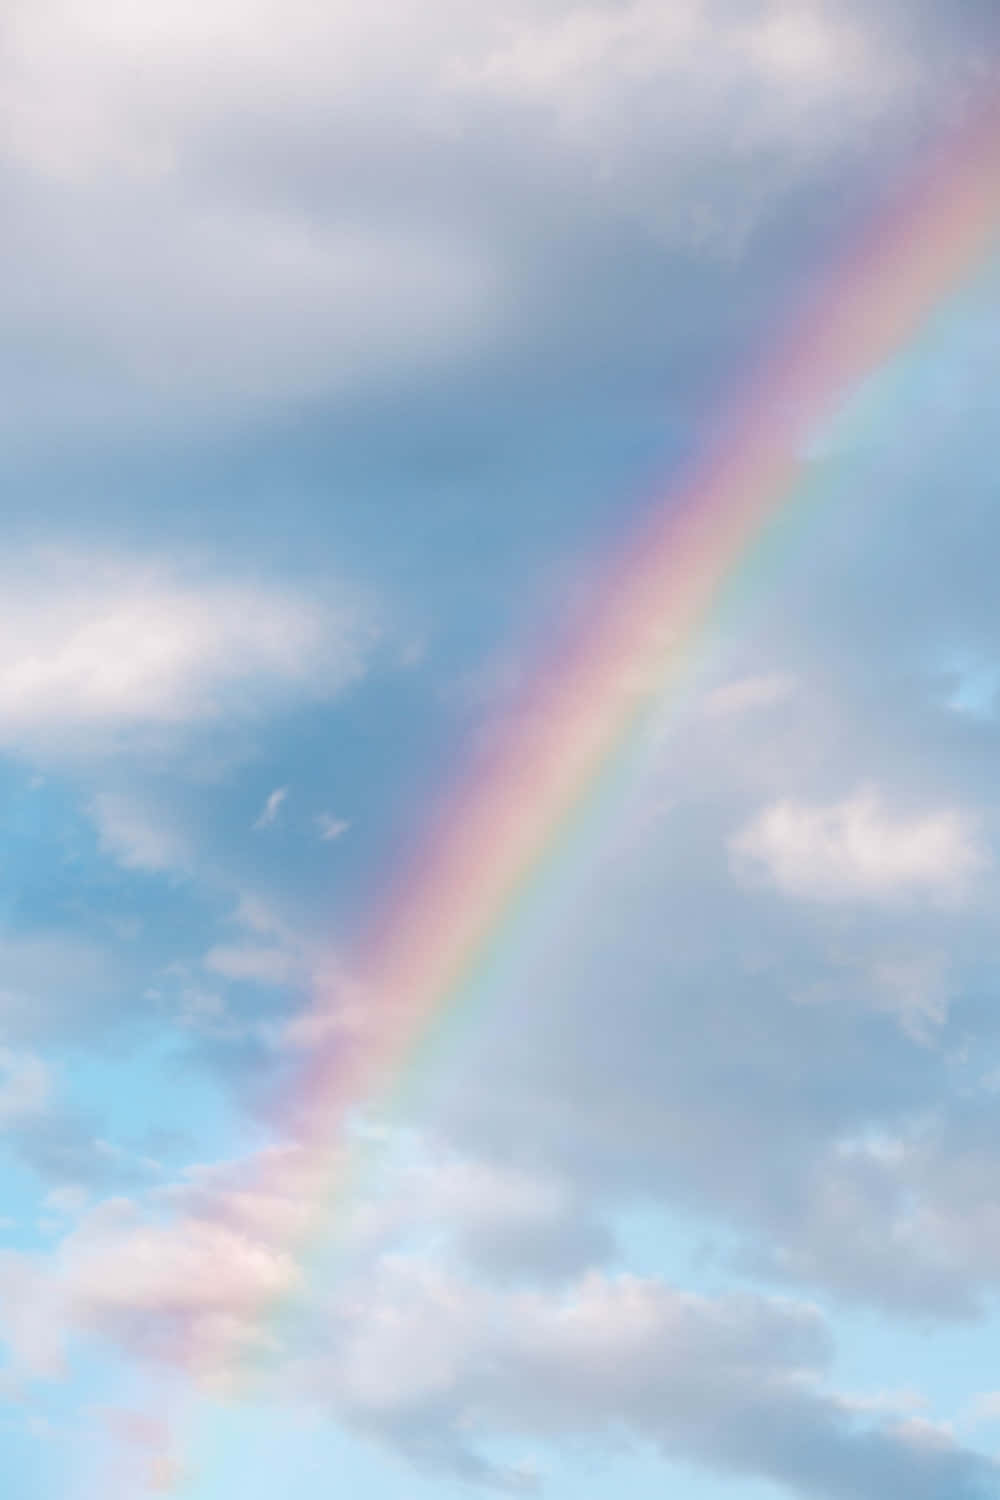 Here's to Rainbows, bringing brightness and cheer to days of grey